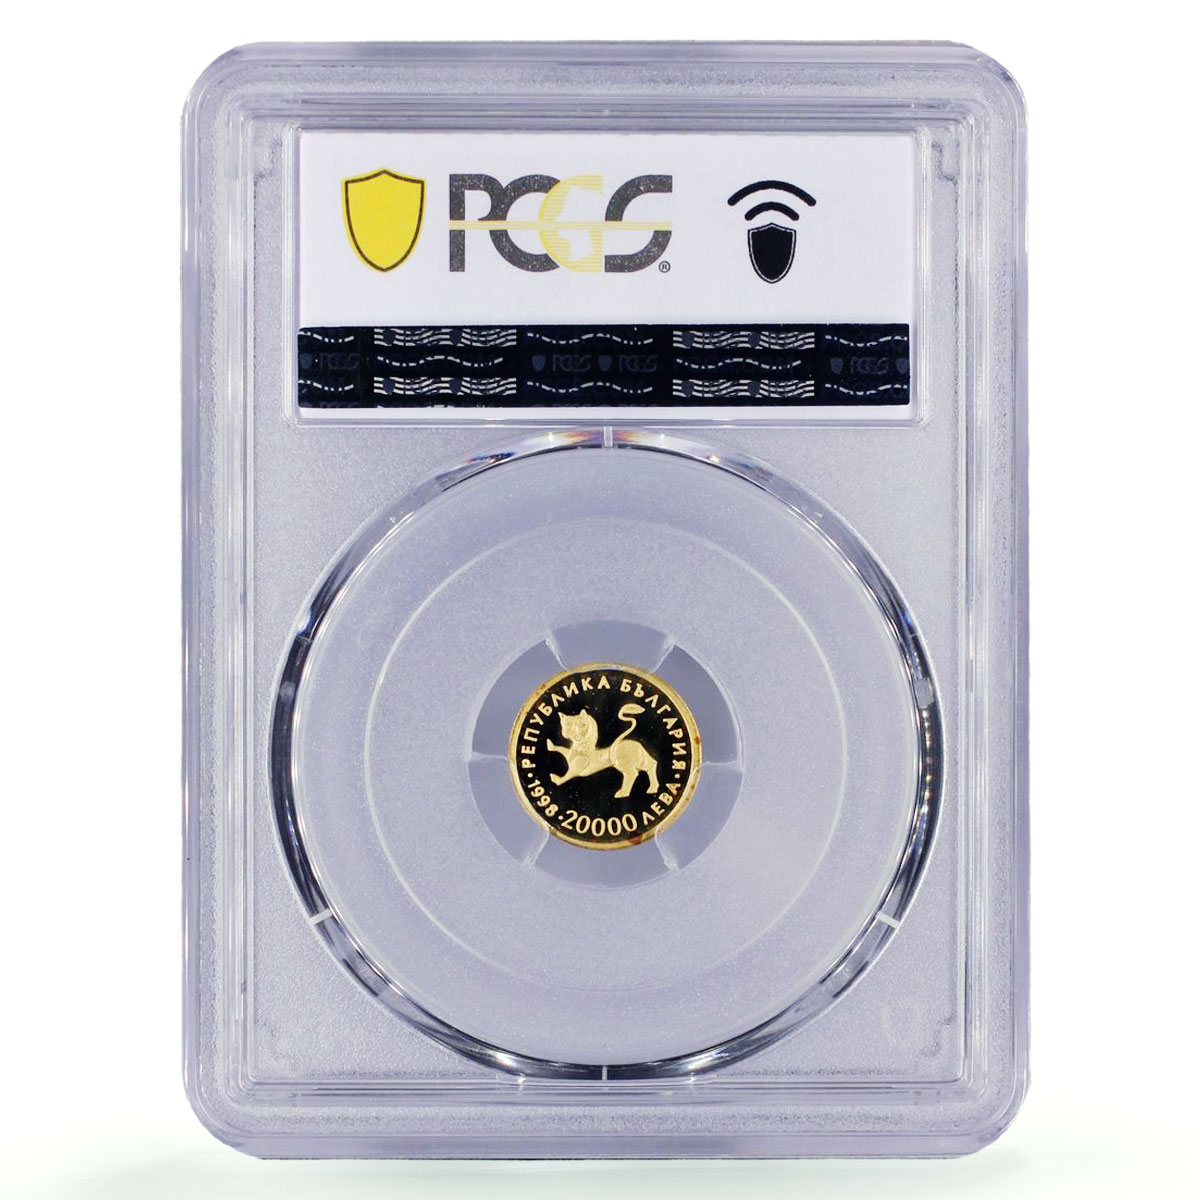 Bulgaria 20000 leva King Ivan Alexander Tetraevangelia PR67 PCGS gold coin 1998